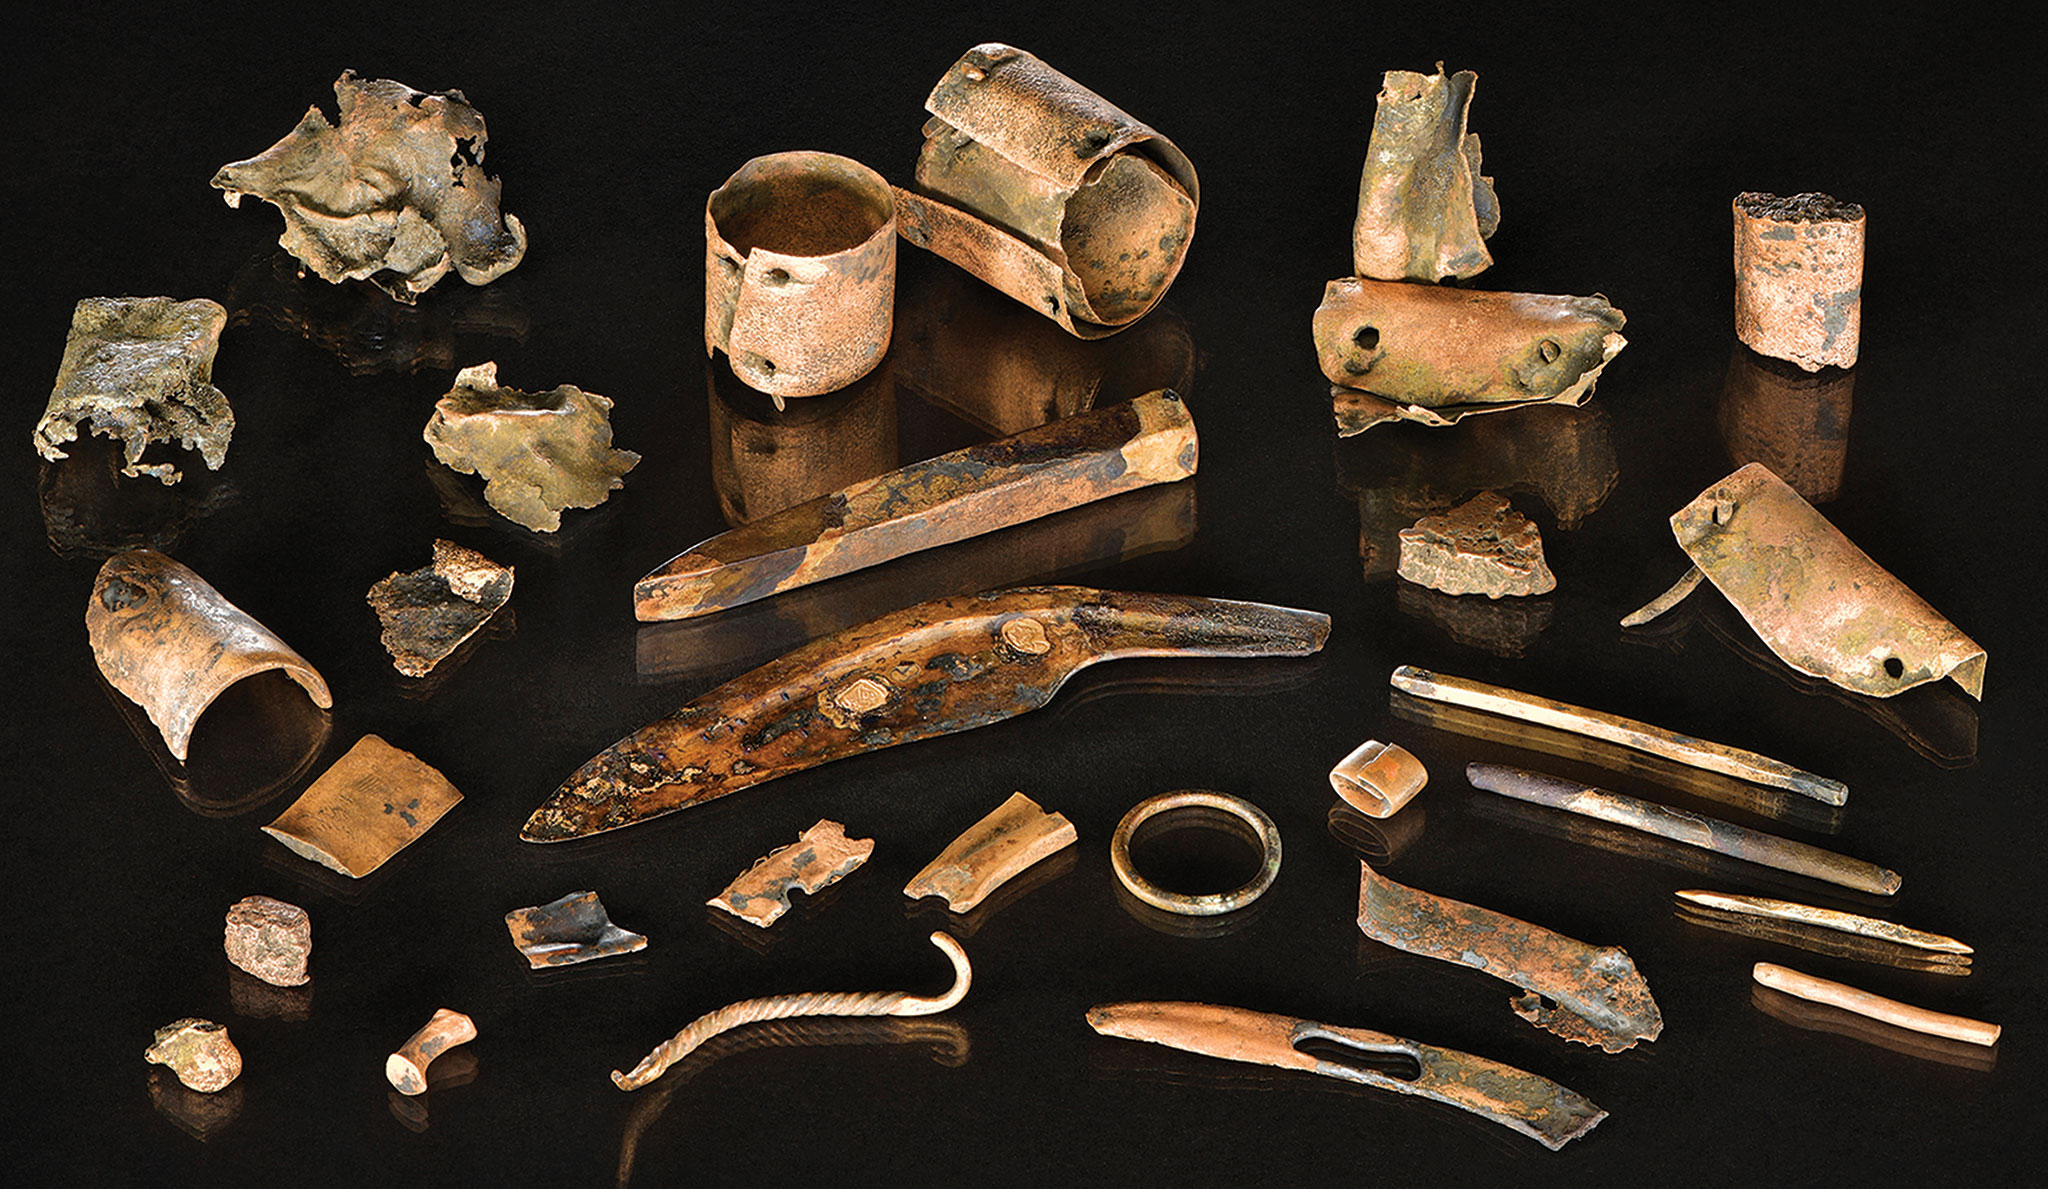 Типы находок. Находки бронзового века в Толлензе. Археологические находки бронзового века. Толлензе битва бронзового века.